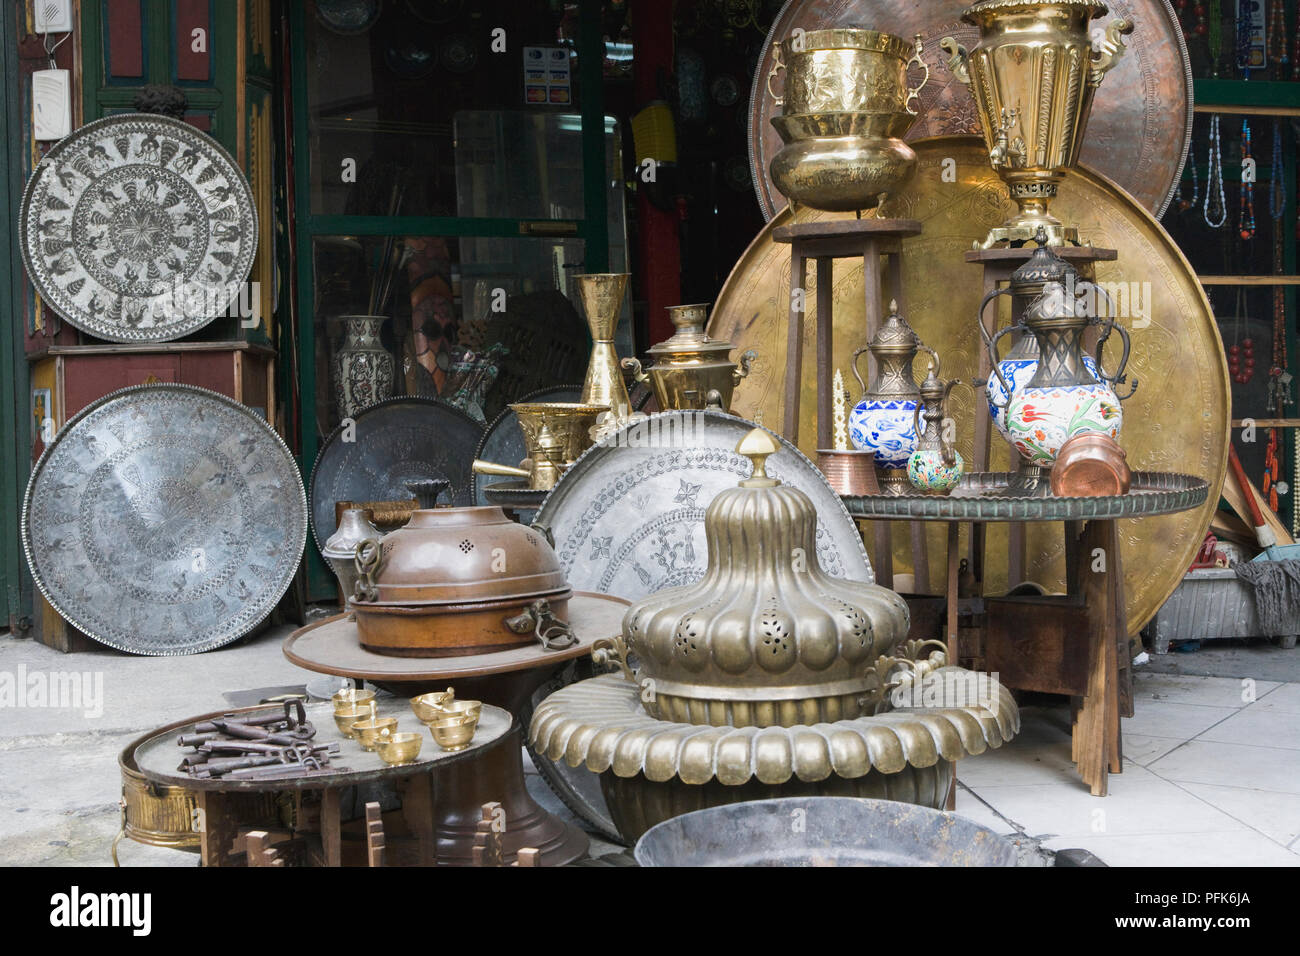 Türkei, Istanbul, Grand Bazaar, antik Metallwaren am Markt angezeigt Abschaltdruck Stockfoto